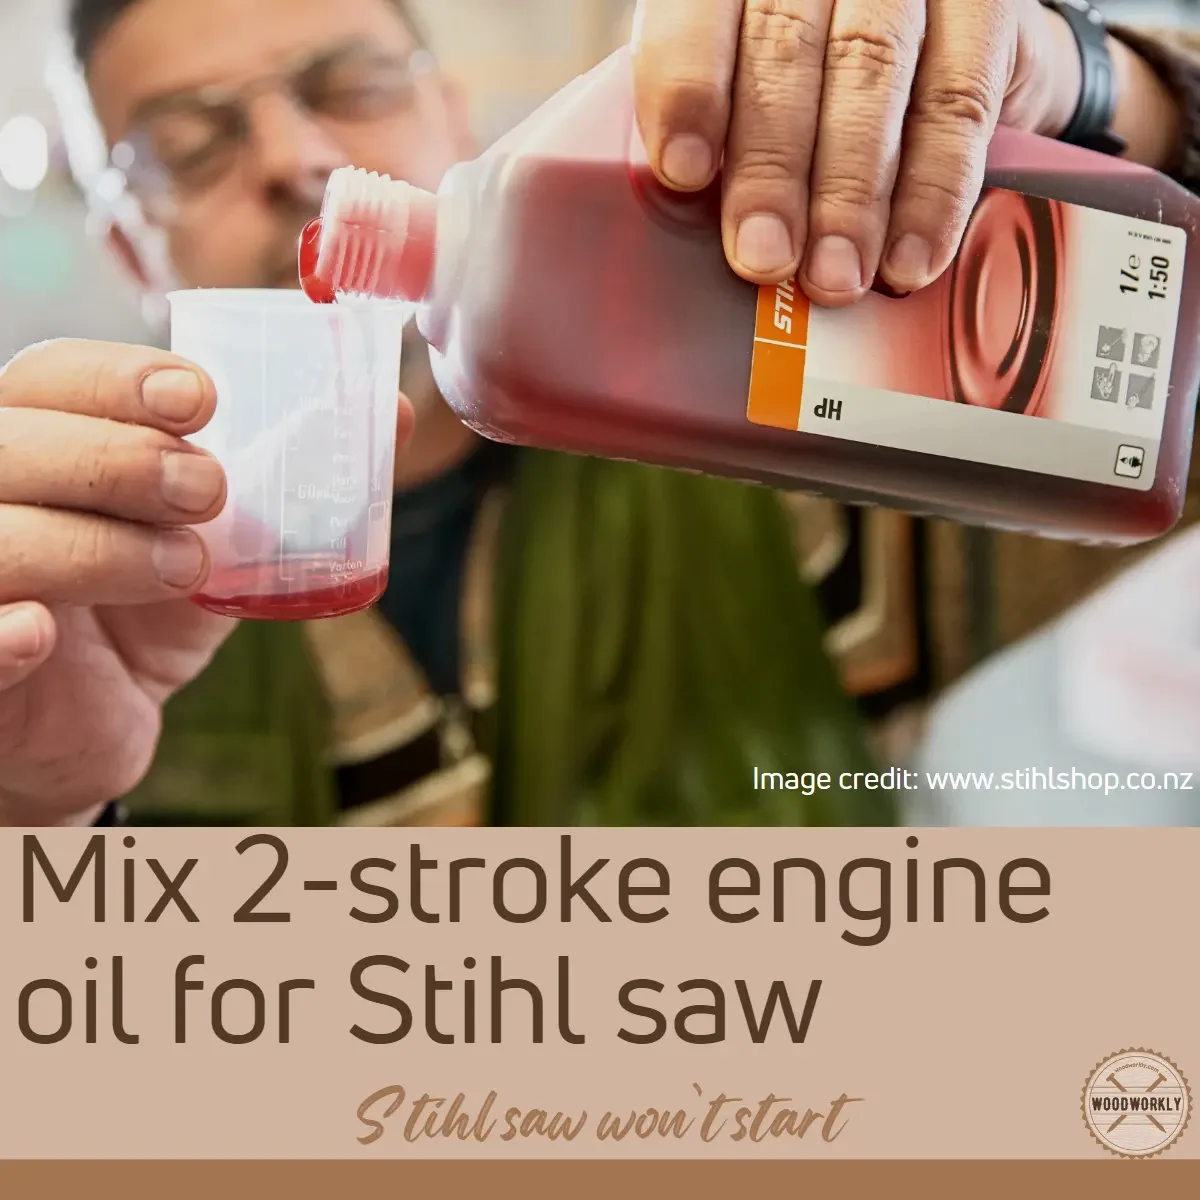 Mix 2-stroke engine oil for Stihl saw